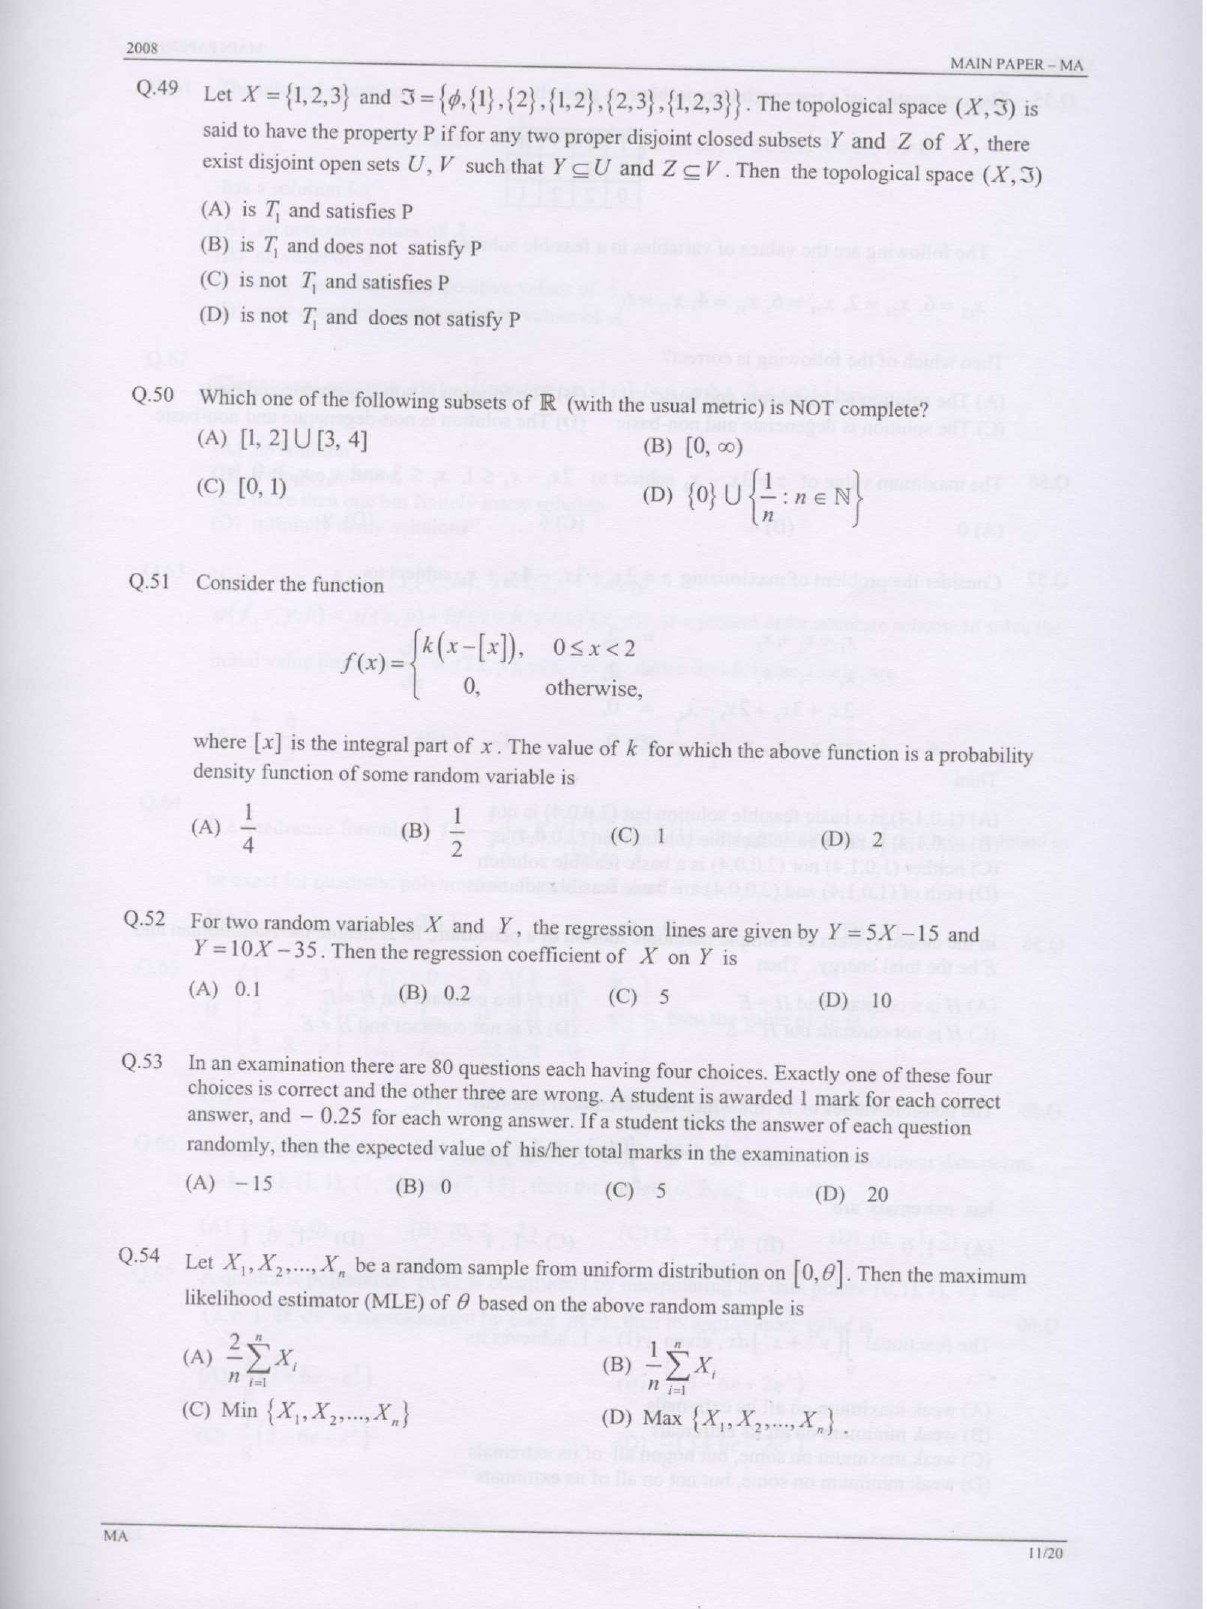 GATE Exam Question Paper 2008 Mathematics 11